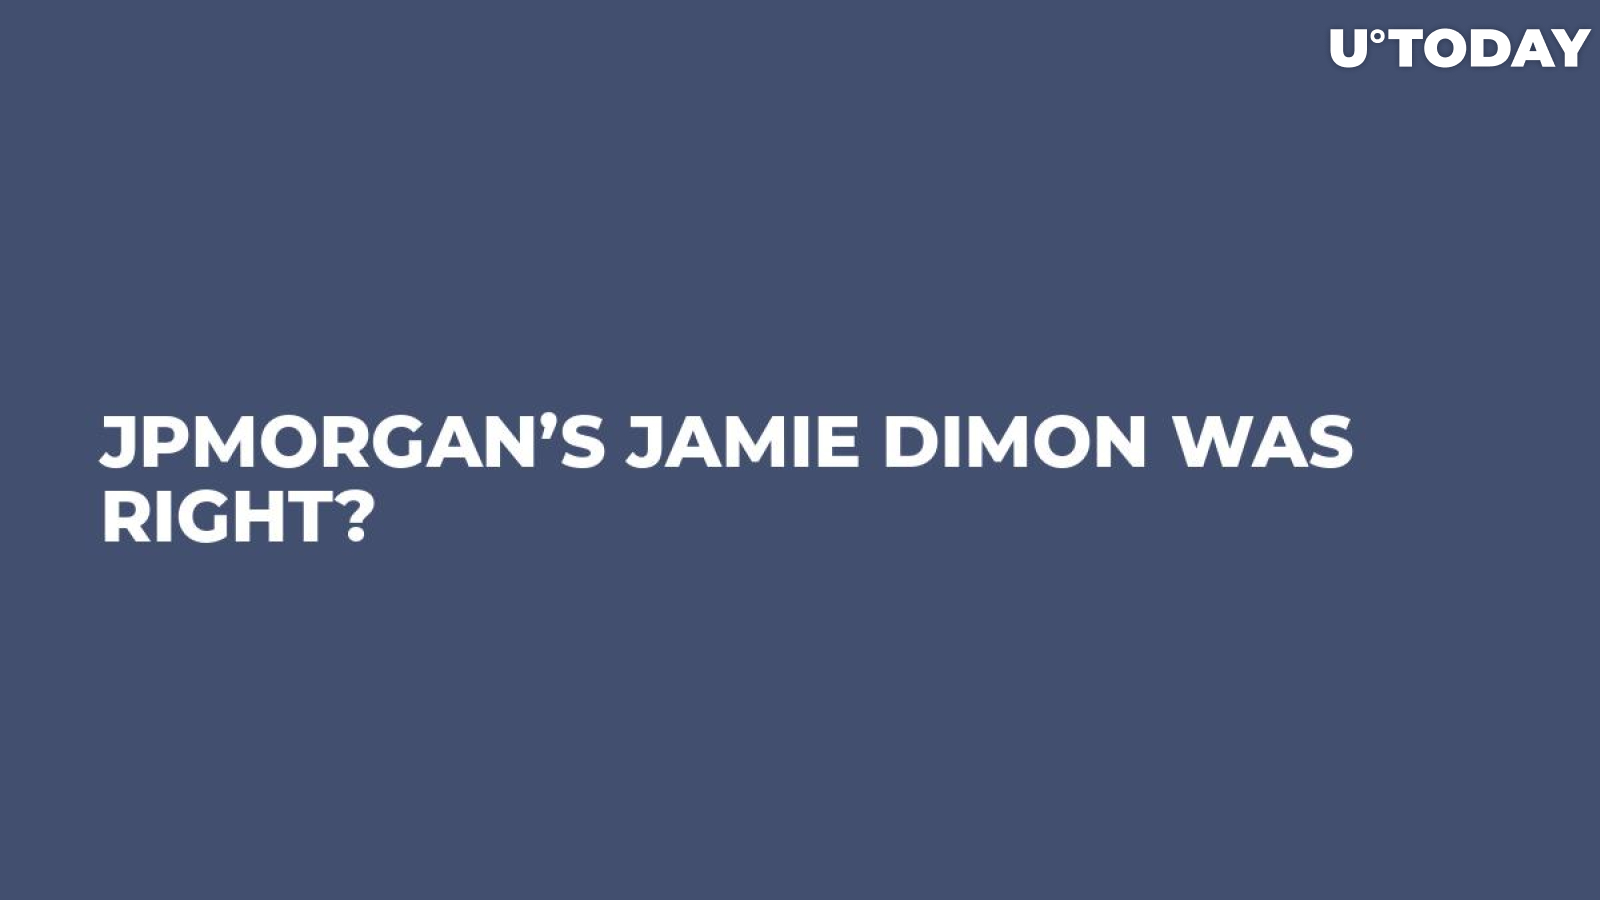 JPMorgan’s Jamie Dimon Was Right?